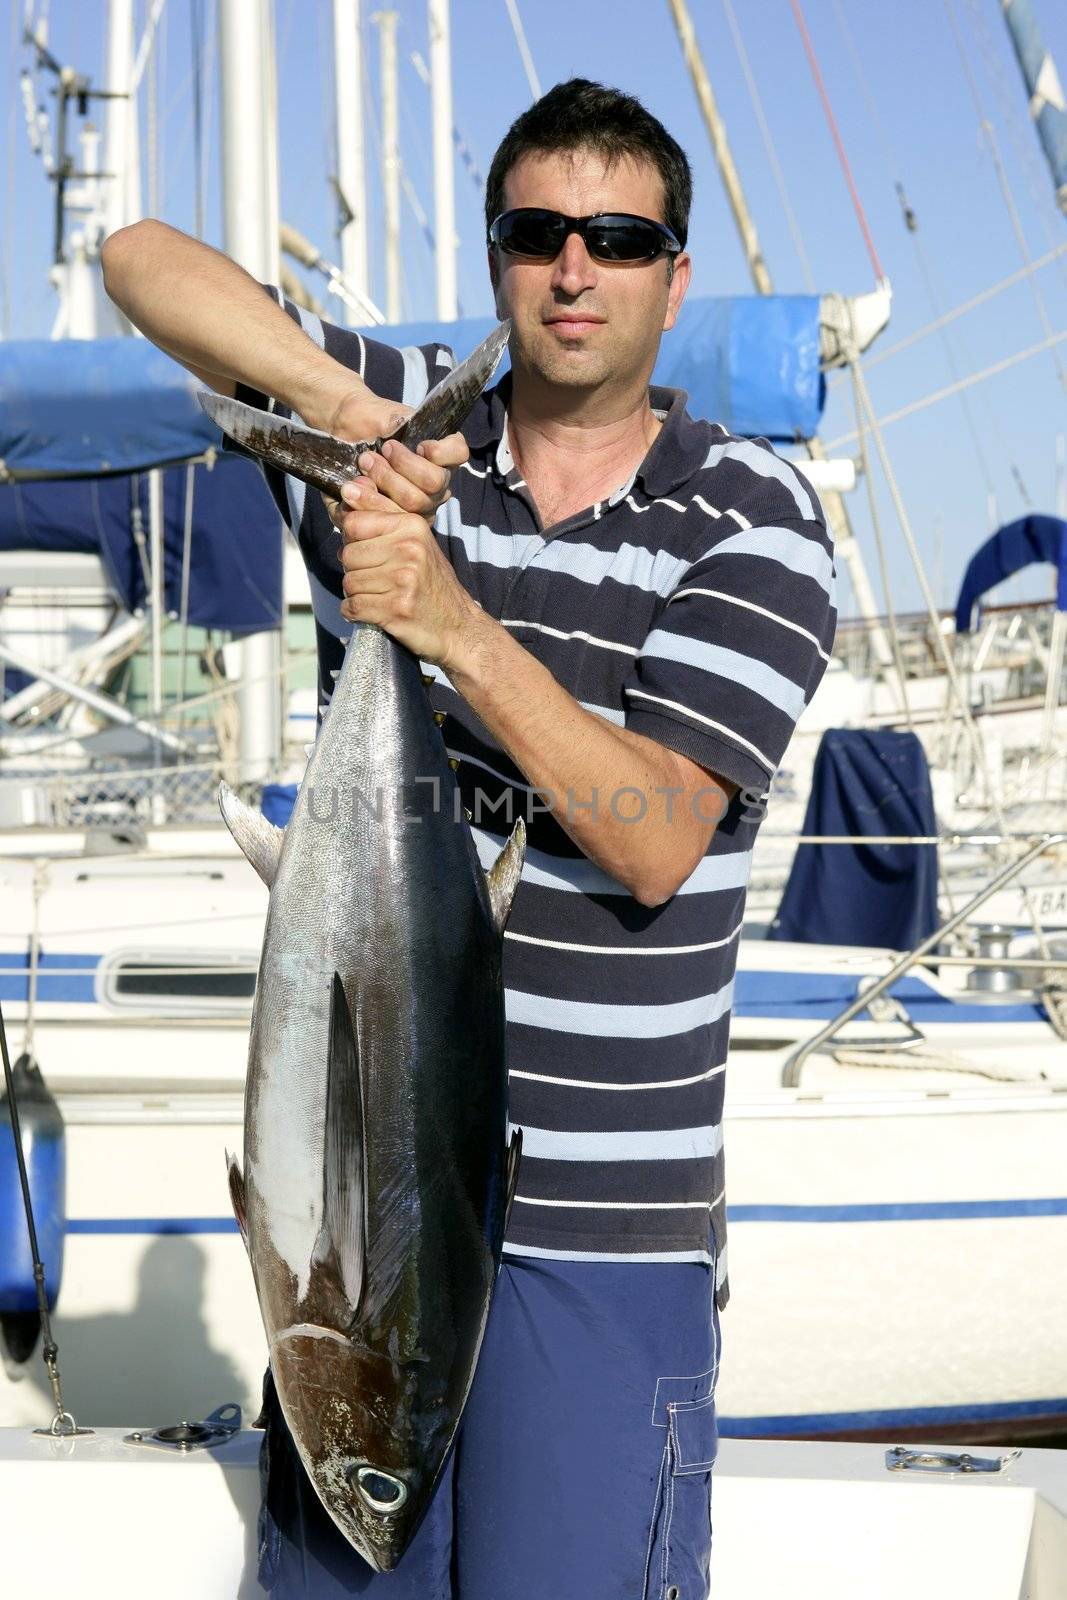 Big game fisherman with saltwater tuna by lunamarina